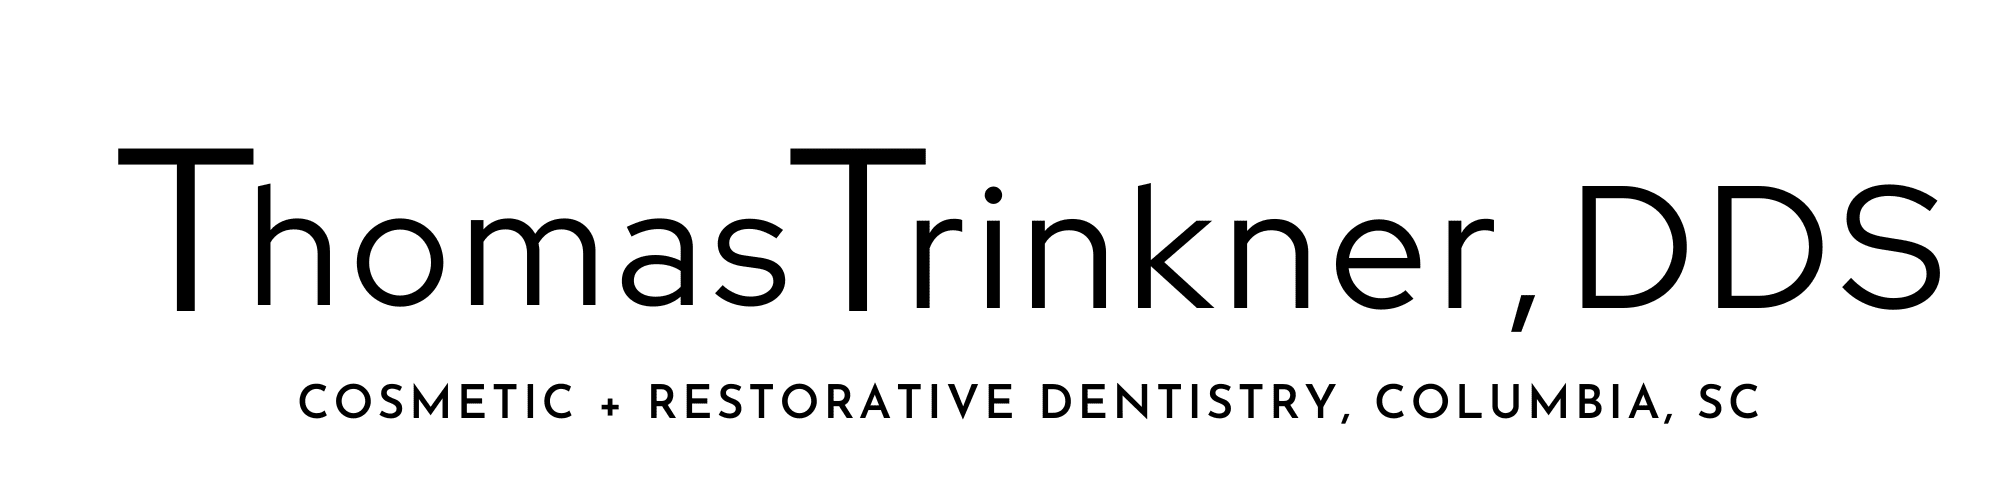 Thomas Trinkner, DDS logo